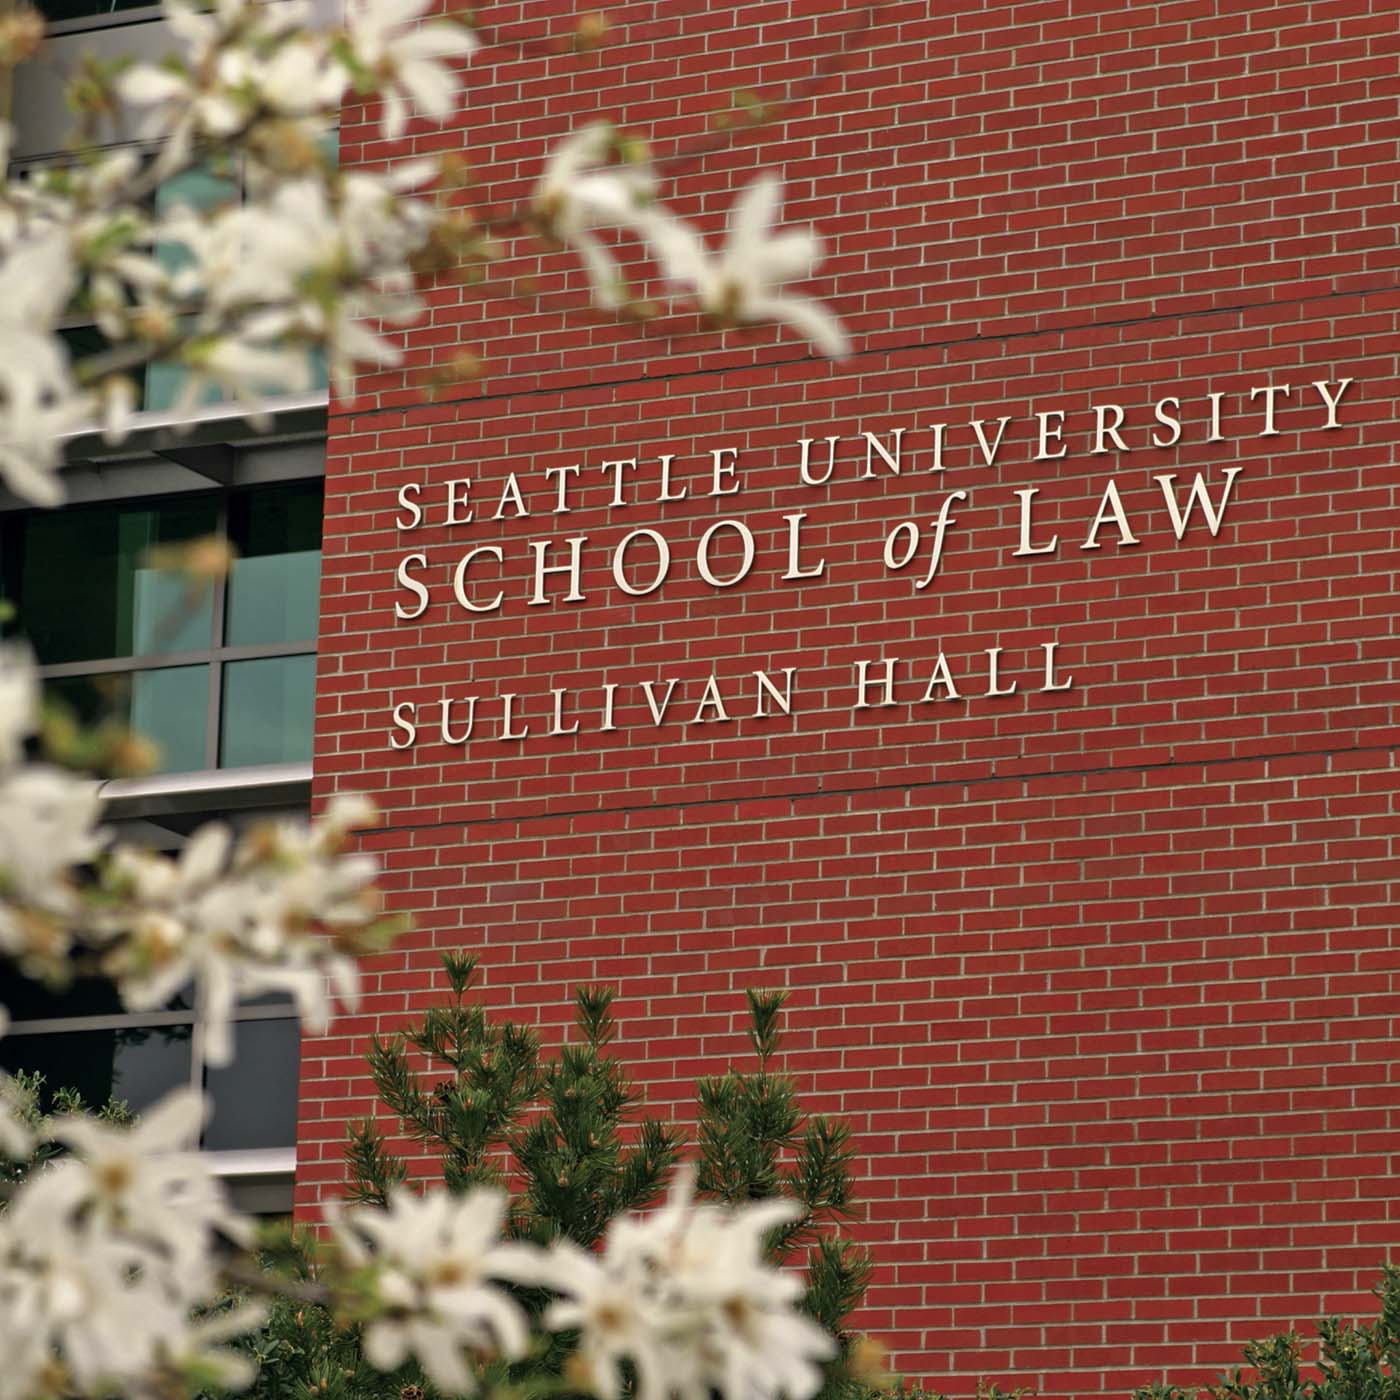 Sullivan Hall brick siding with text 'Seattle University School of Law Sullivan Hall'